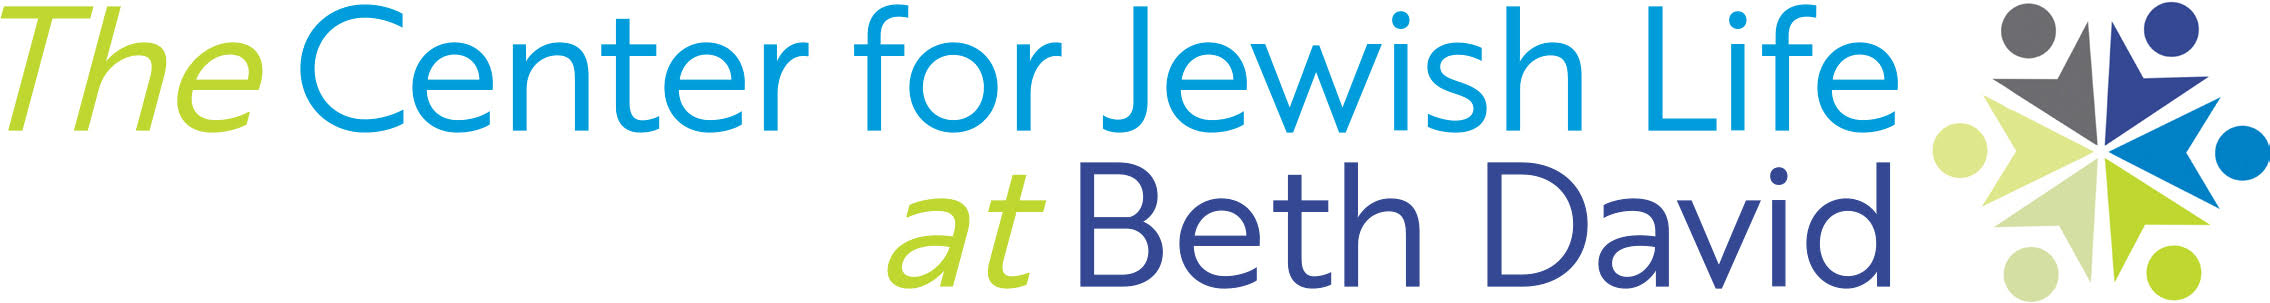 Center for Jewish Life at Beth David - logo